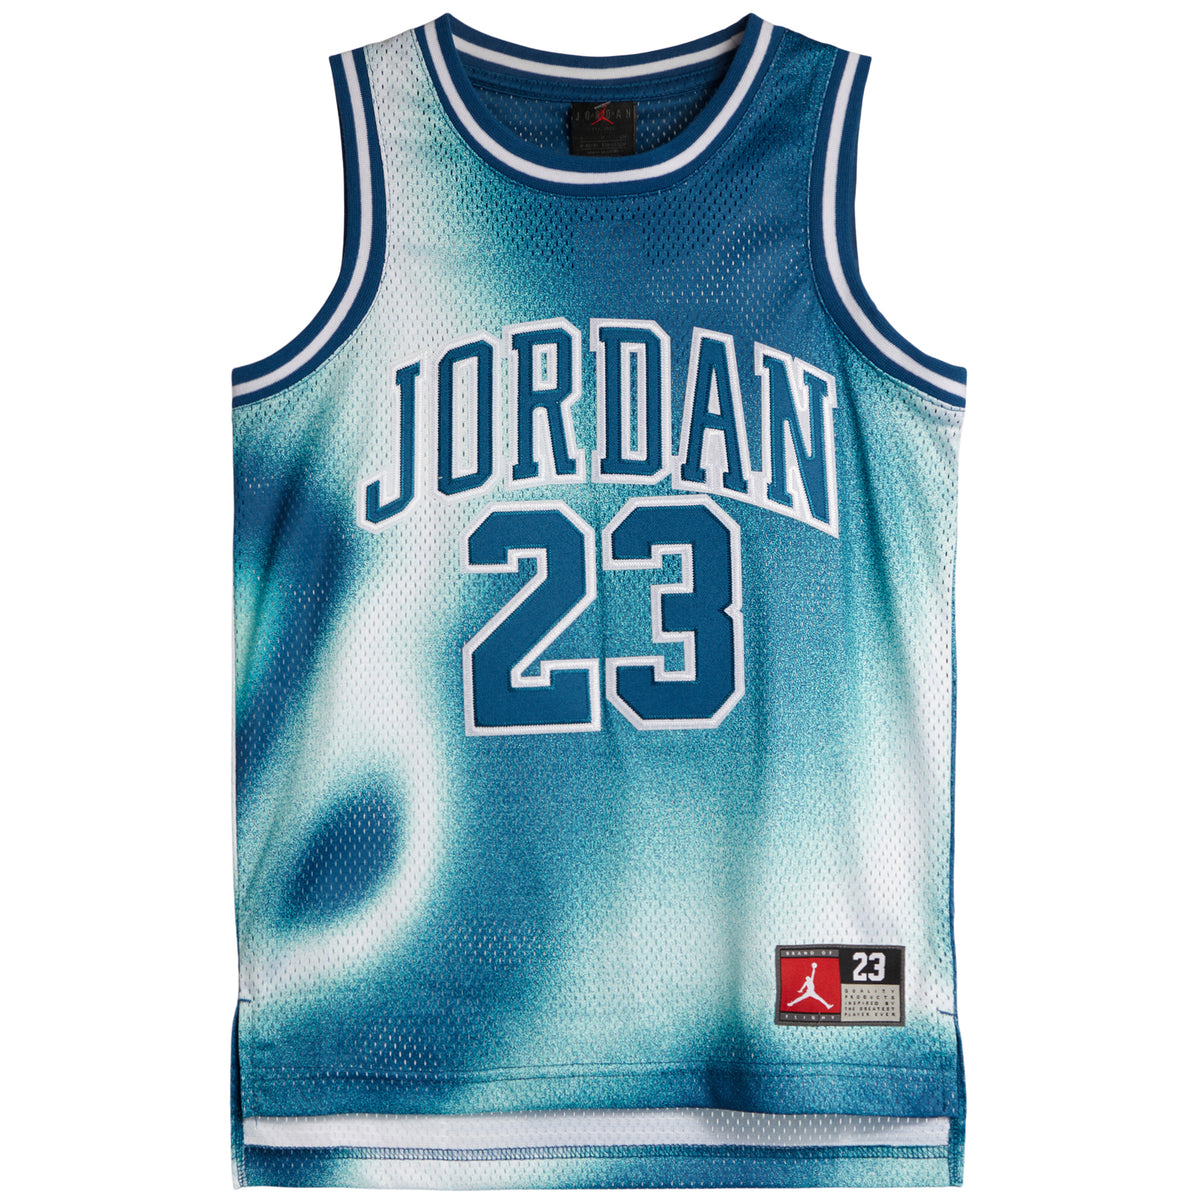 Jordan 23 Jersey | Denny's